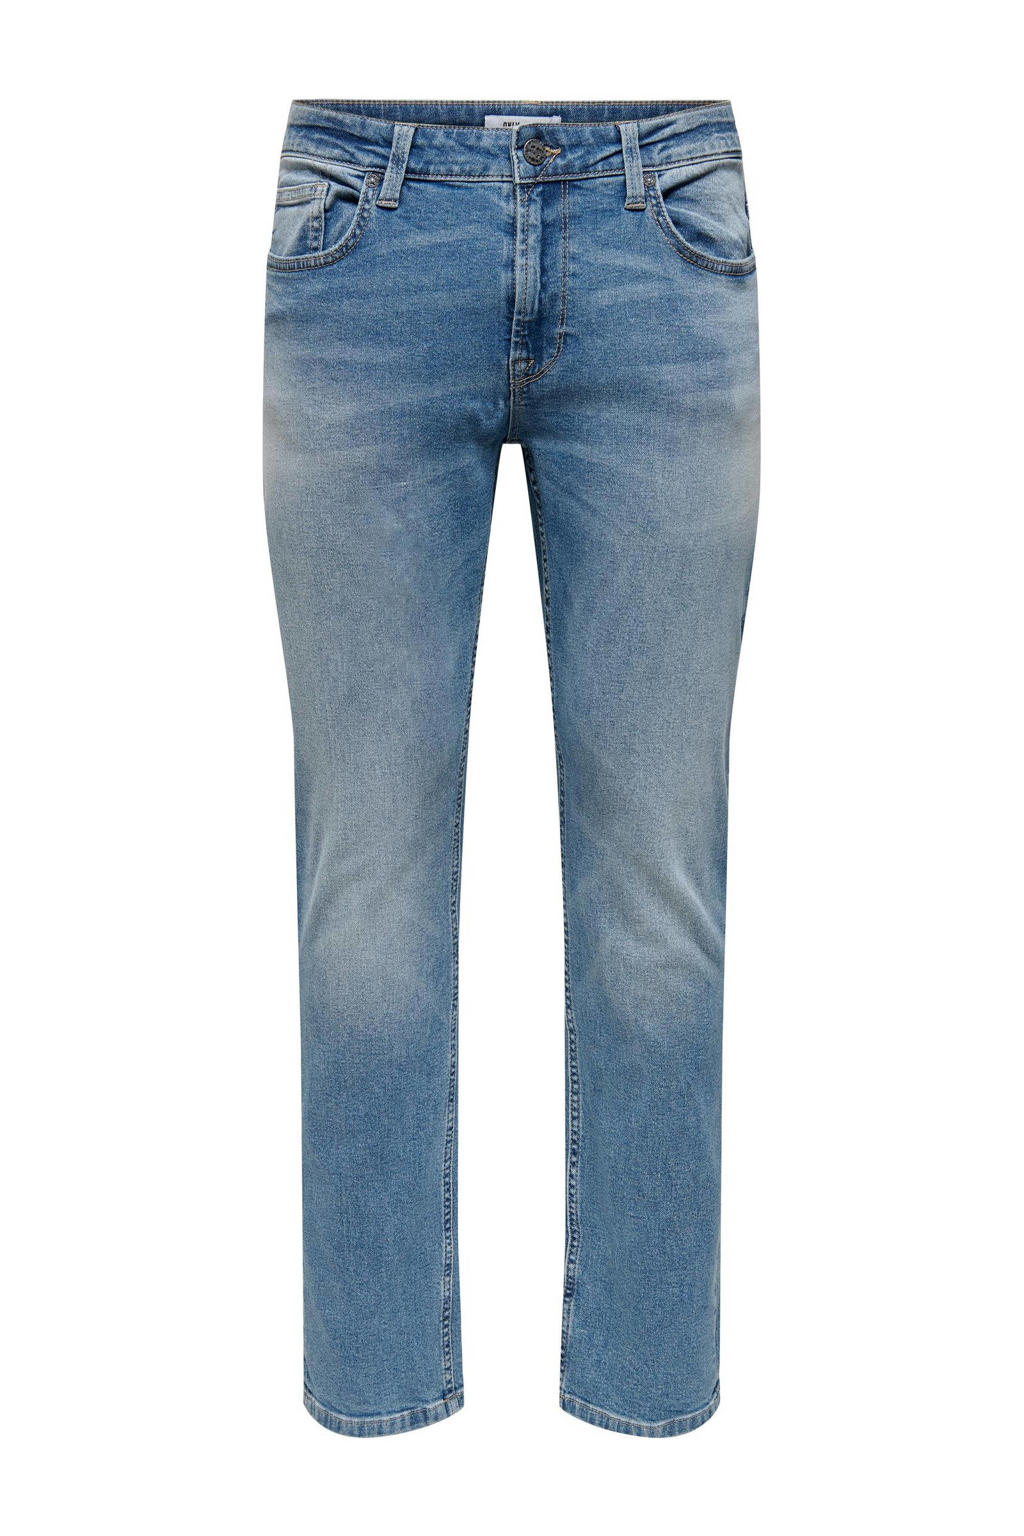 ONLY & SONS regular fit jeans ONSWEFT 2376 blue denim